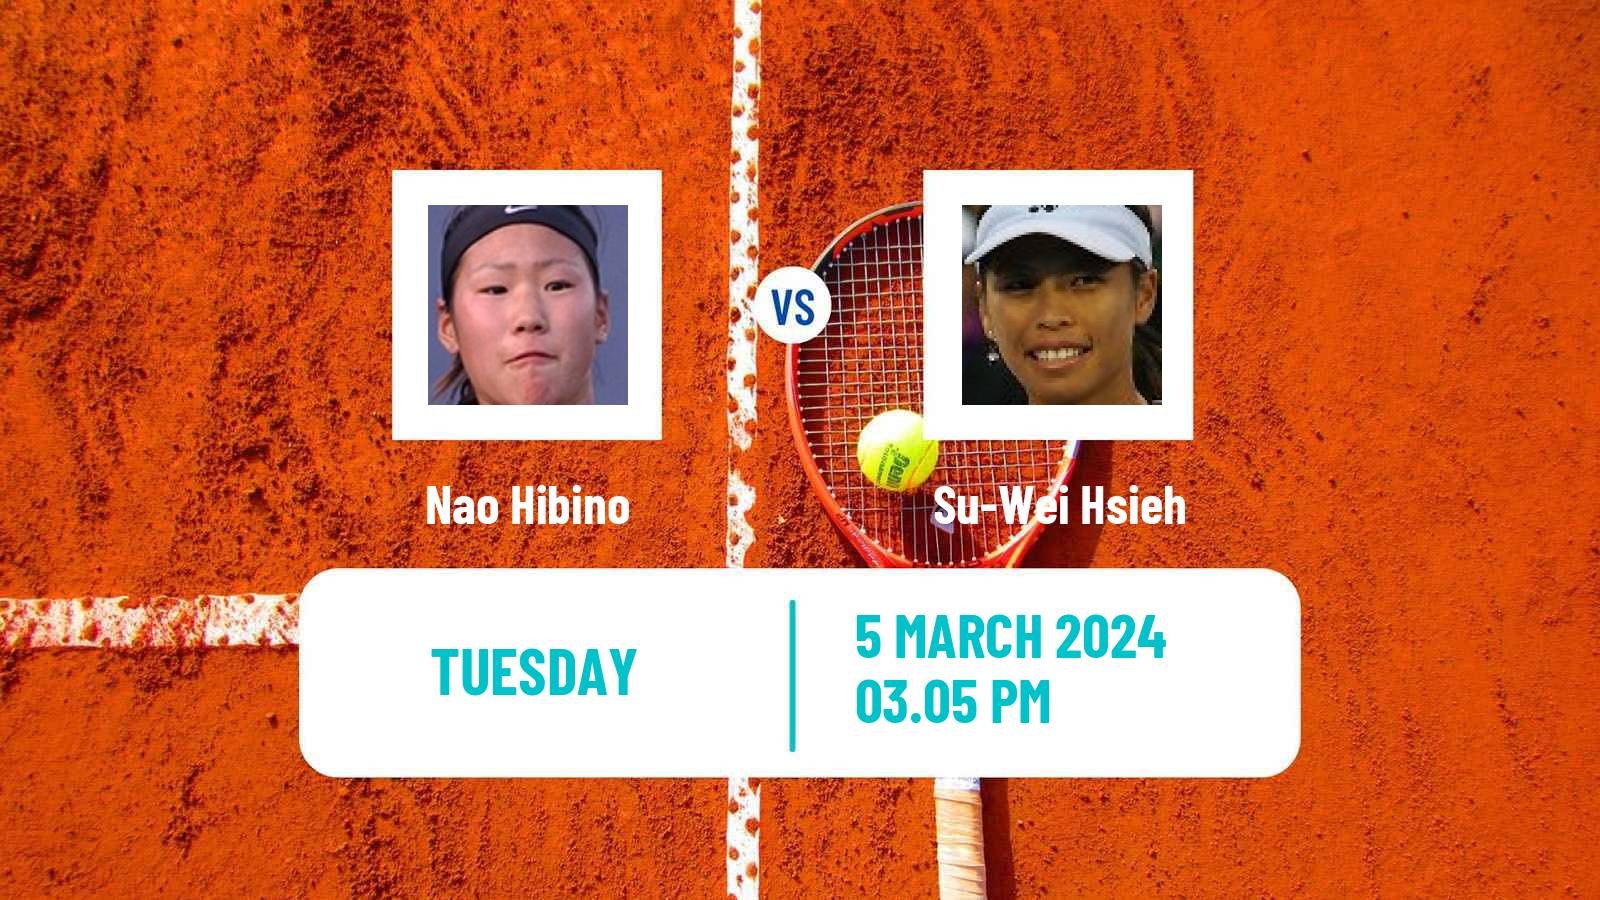 Tennis WTA Indian Wells Nao Hibino - Su-Wei Hsieh